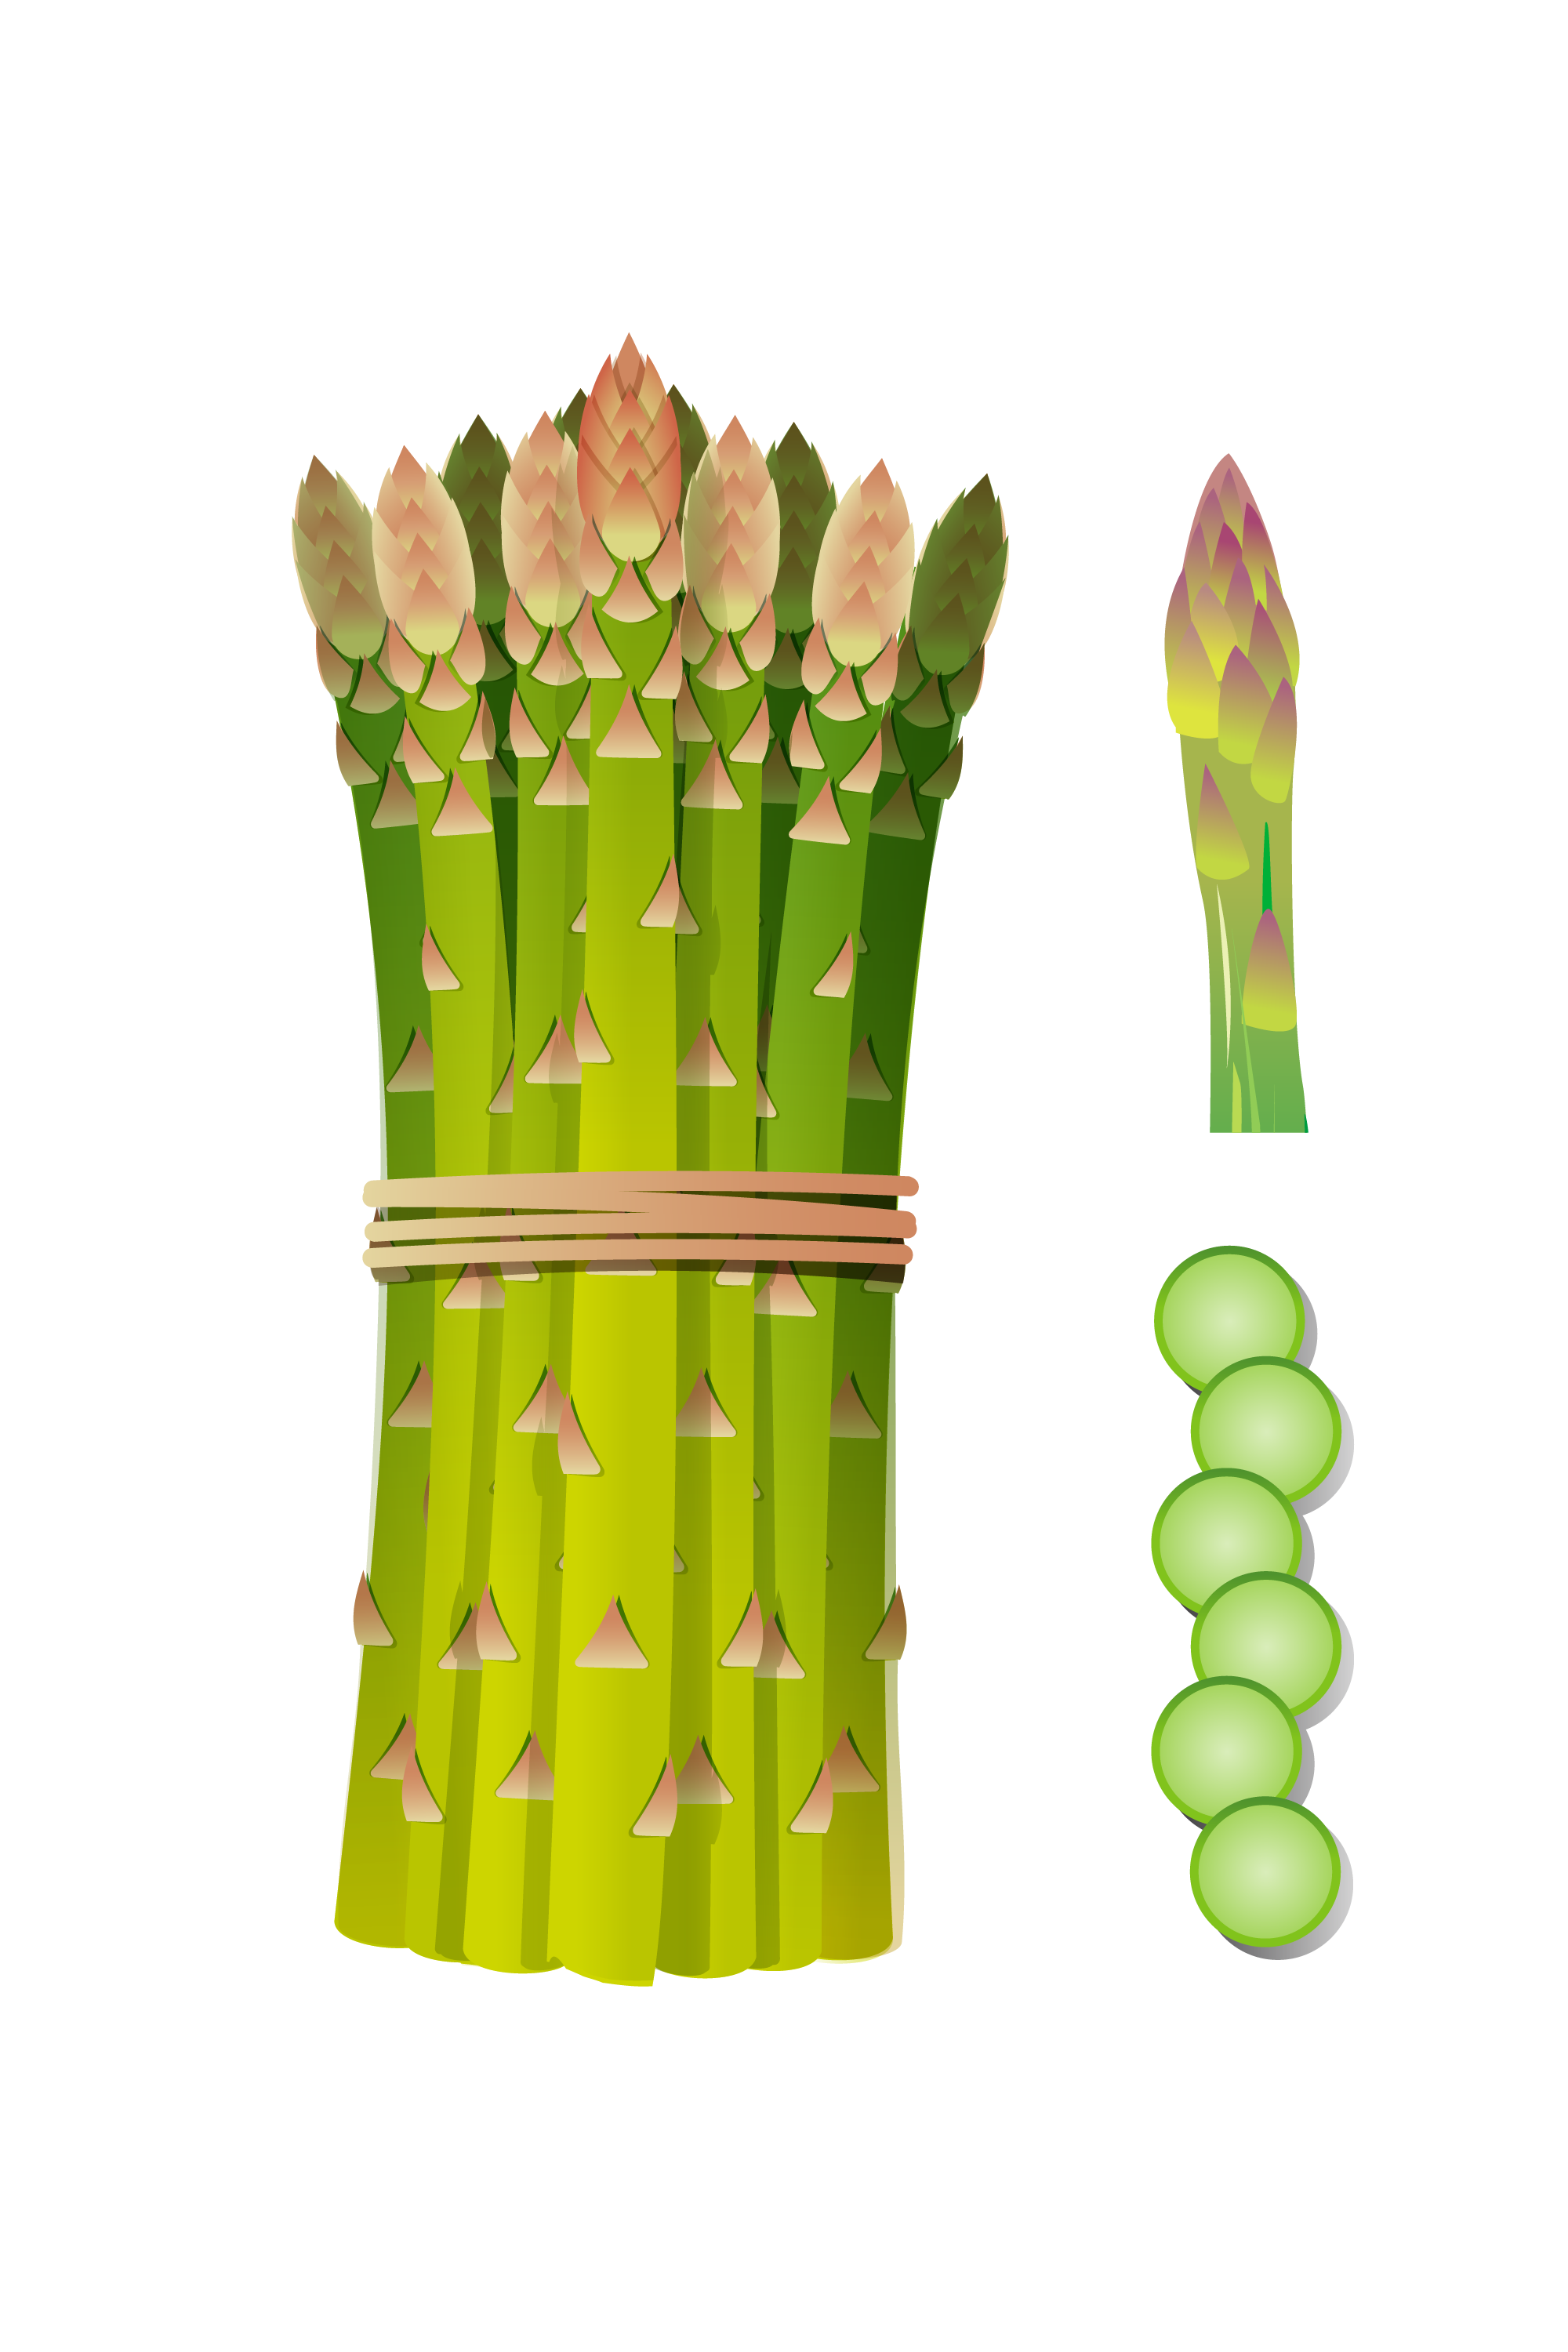 Pngtreebunch of bamboo shoots vegetable 4758946 1